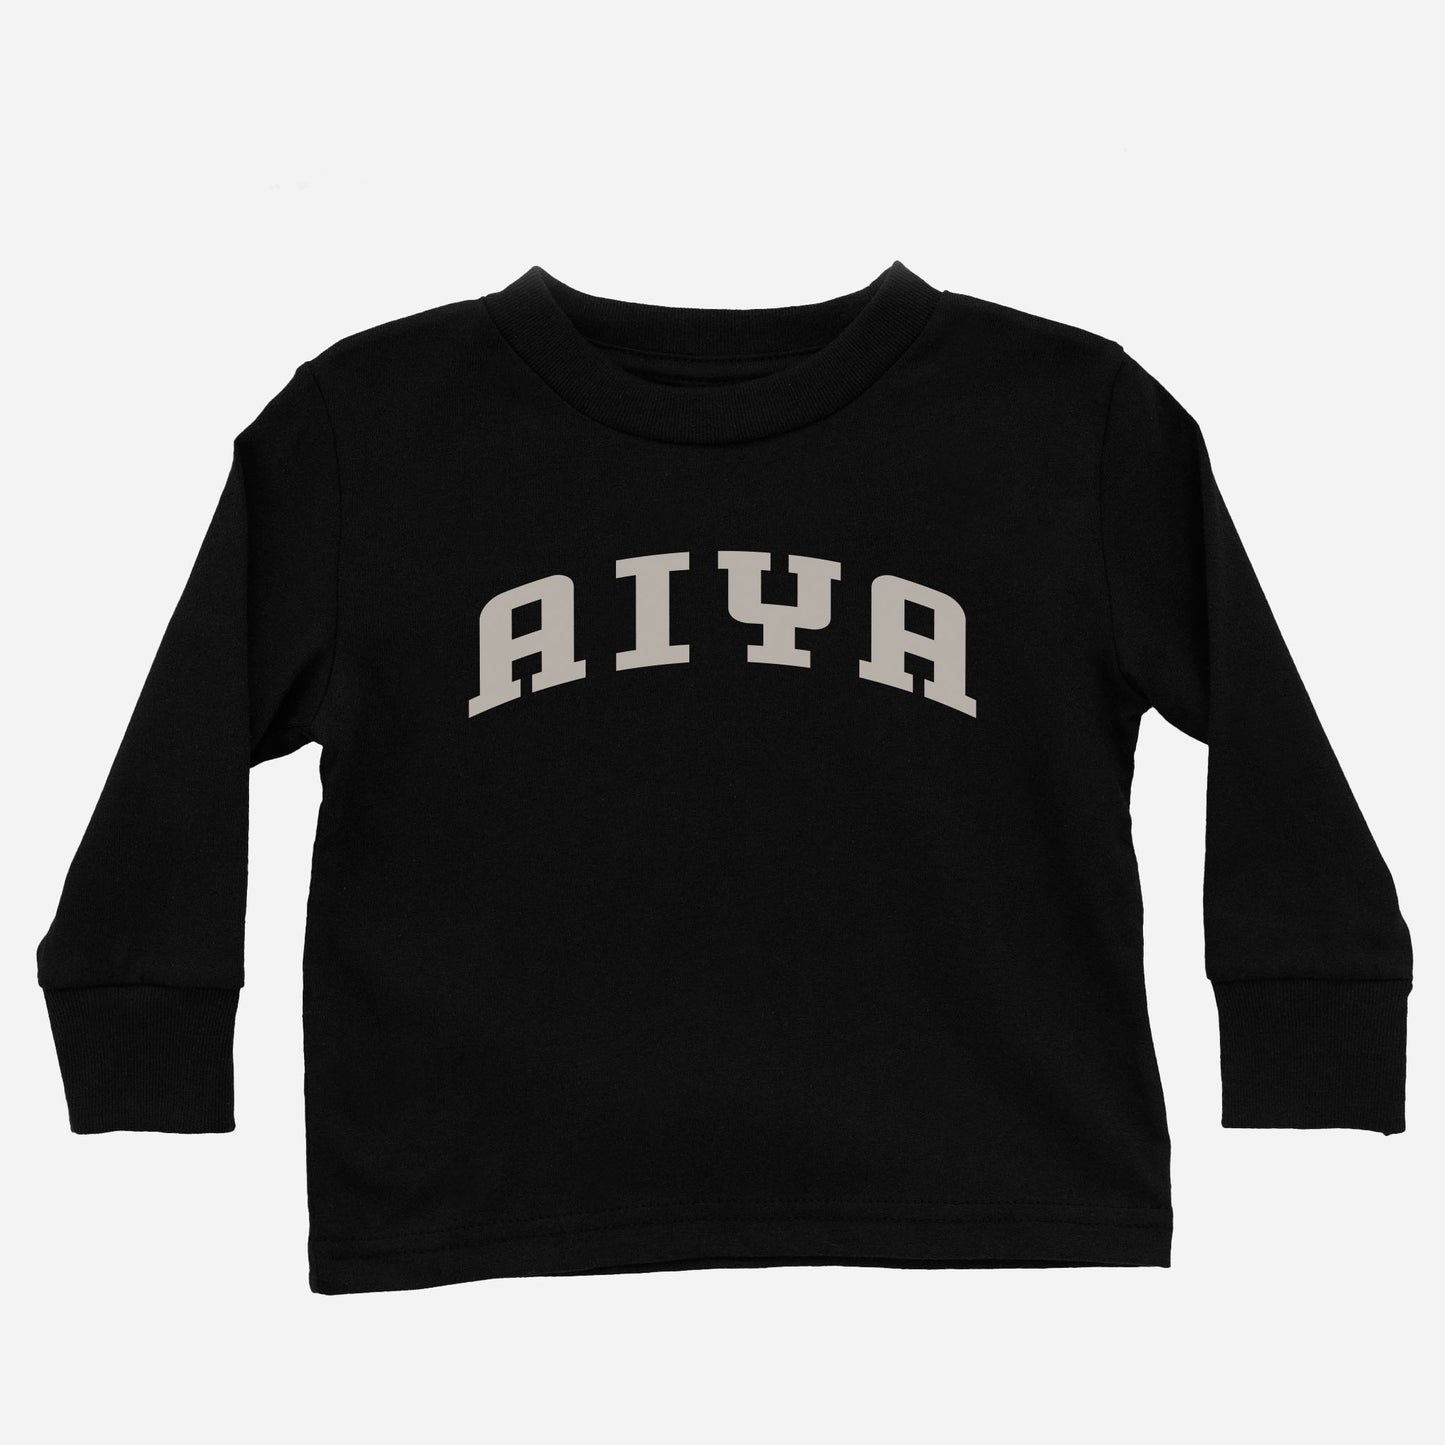 Aiya Toddler Long Sleeve Shirt black - Asian Baby Clothing